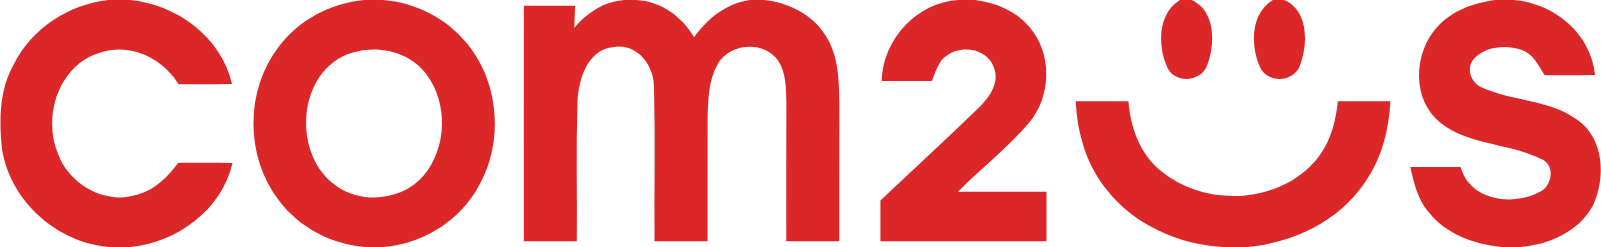 Com2uS logo large (transparent PNG)